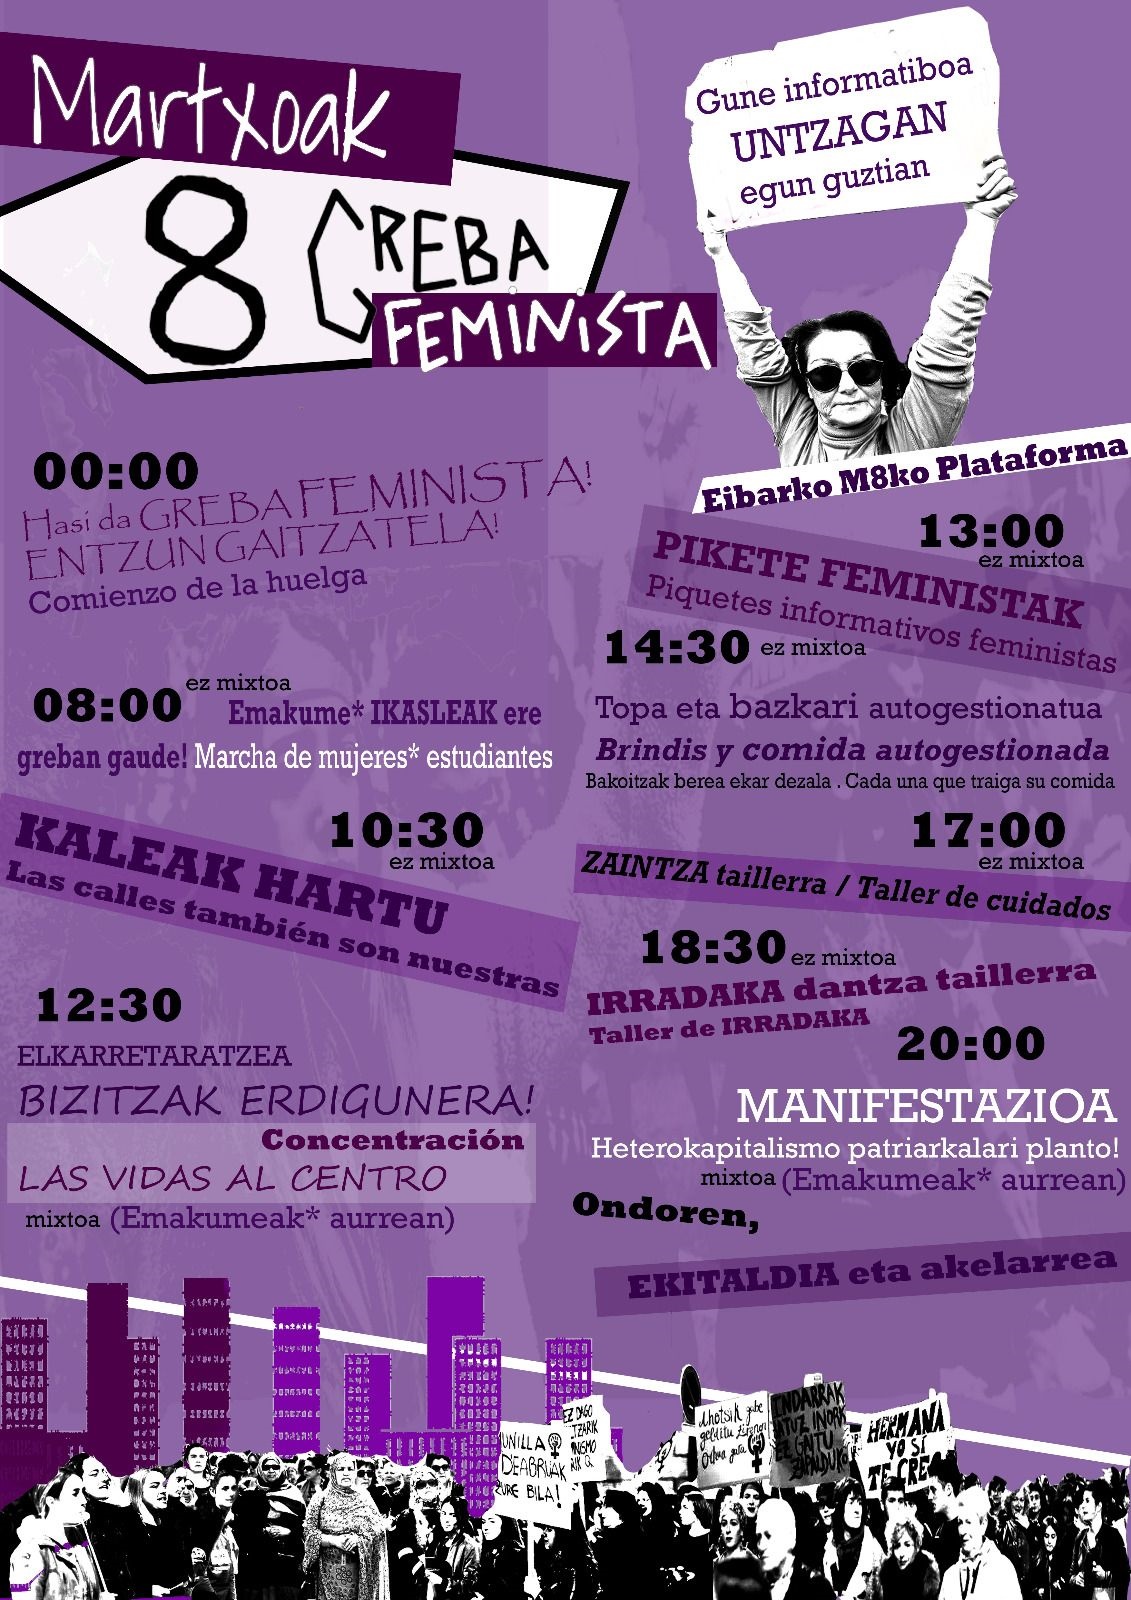 El 8 de marzo: Huelga Feminista 